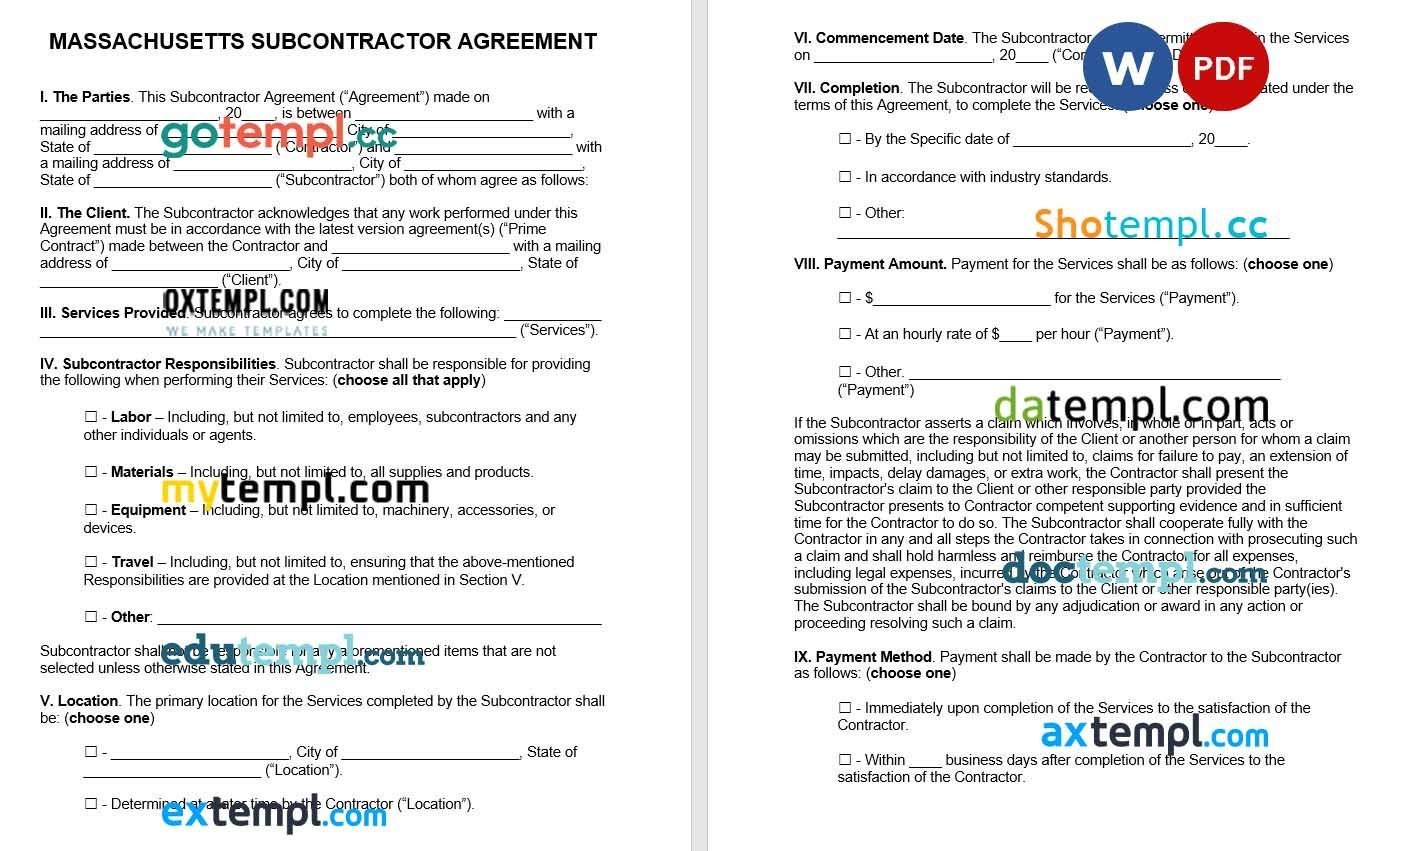 Massachusetts Subcontractor Agreement Word example